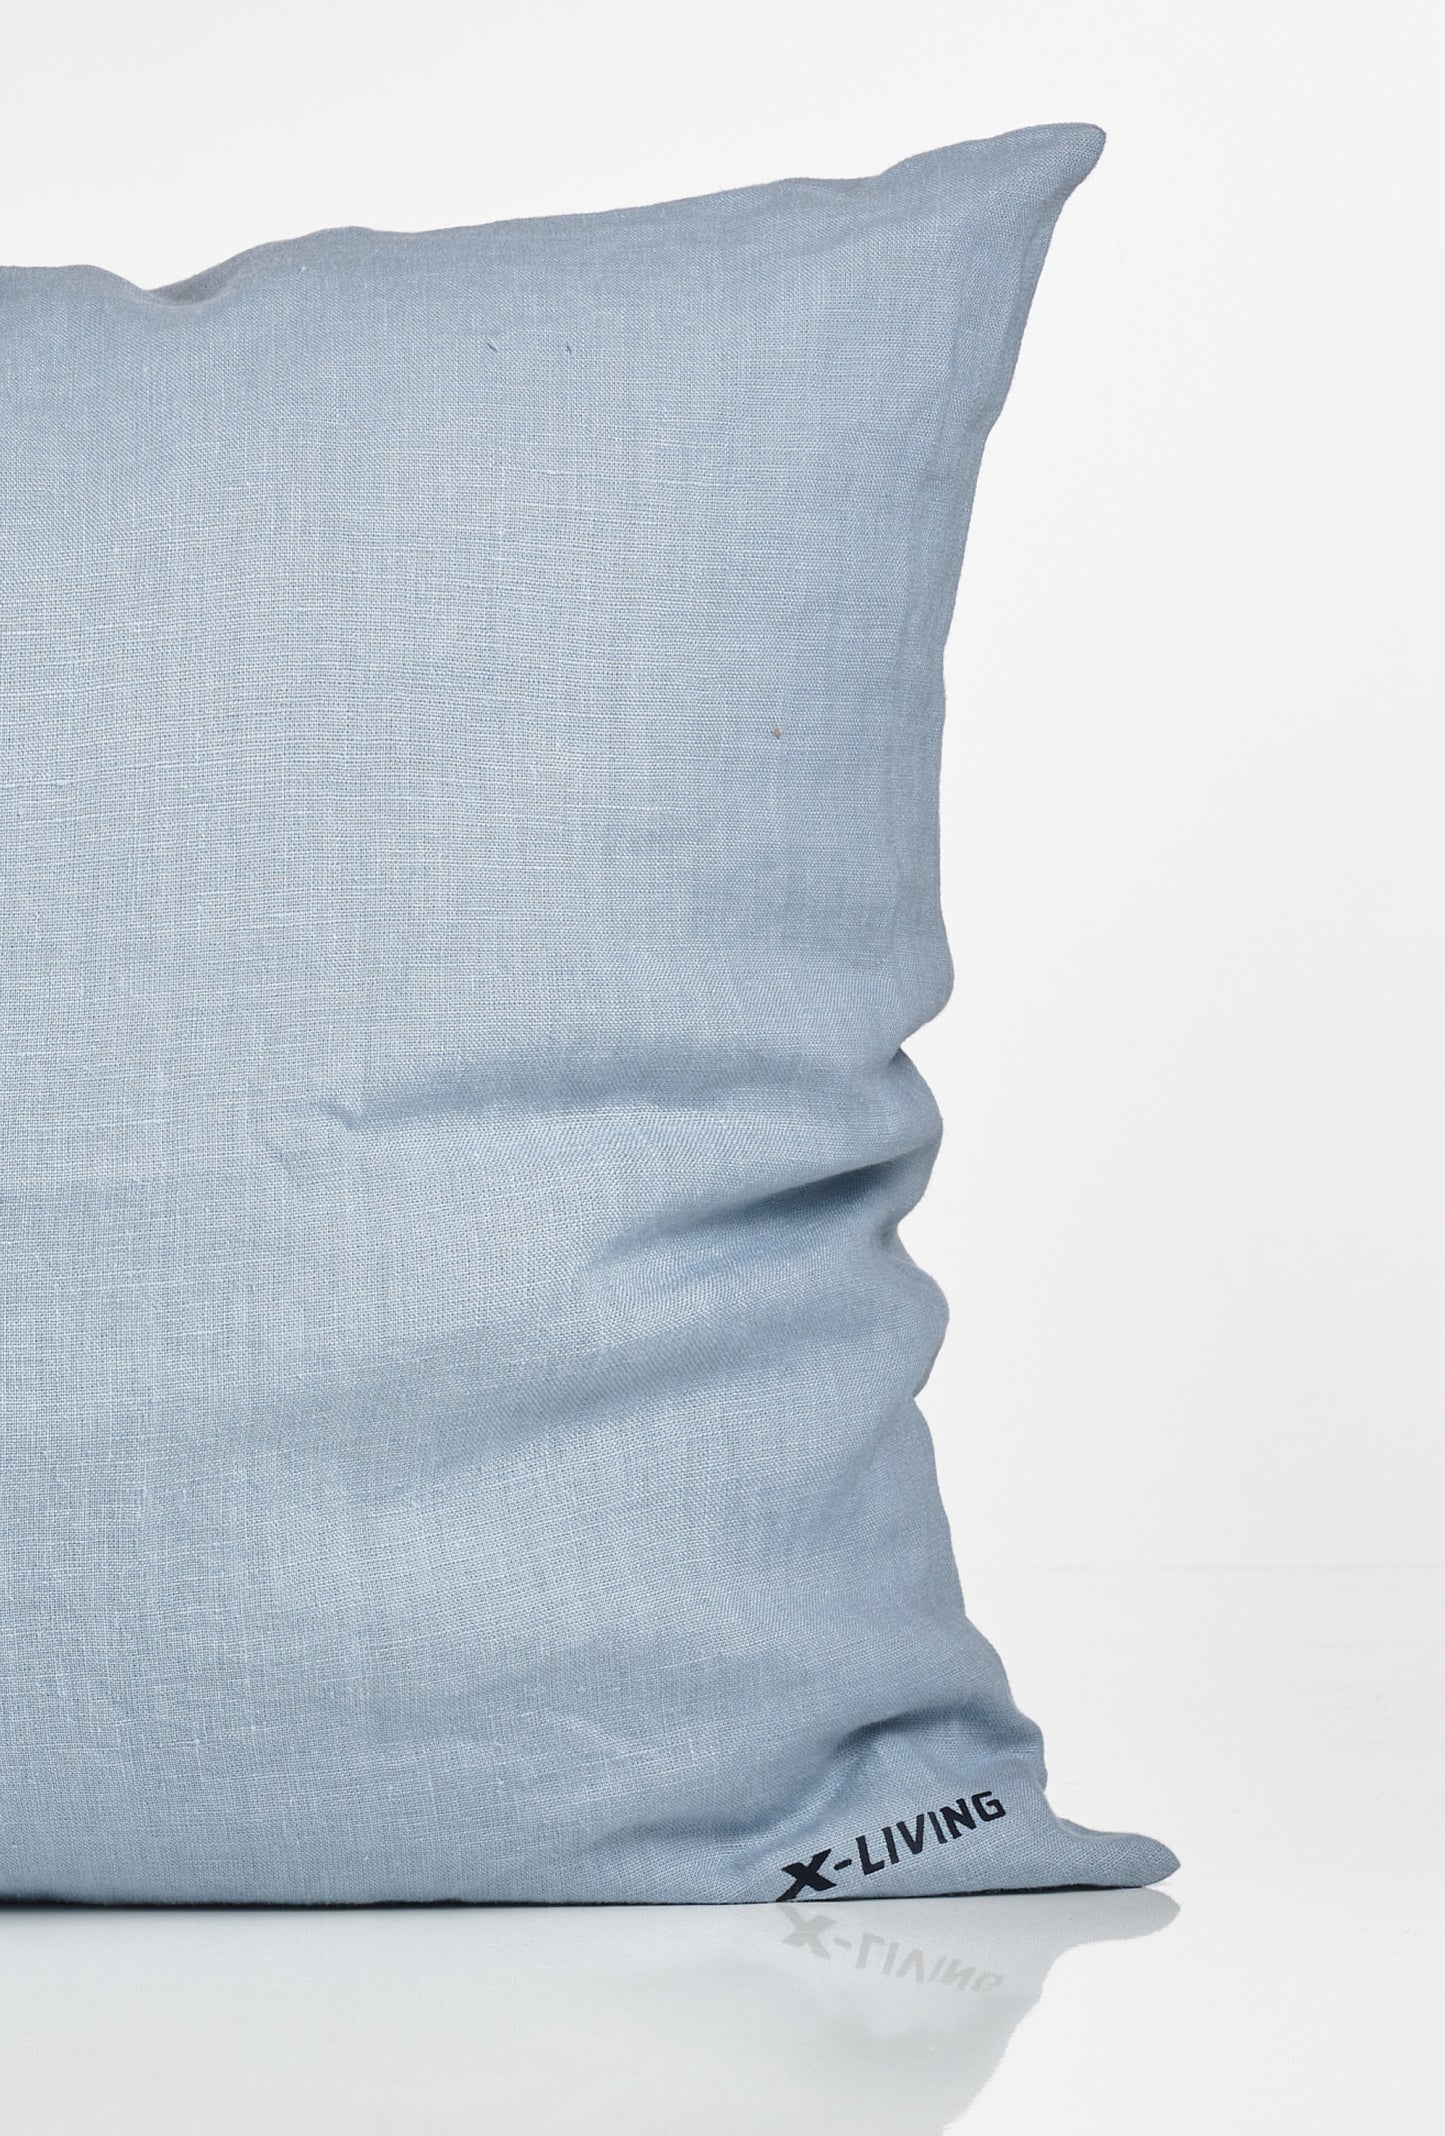 GUSTAV Headboard Fossflake pillow - Light Blue (50x70)